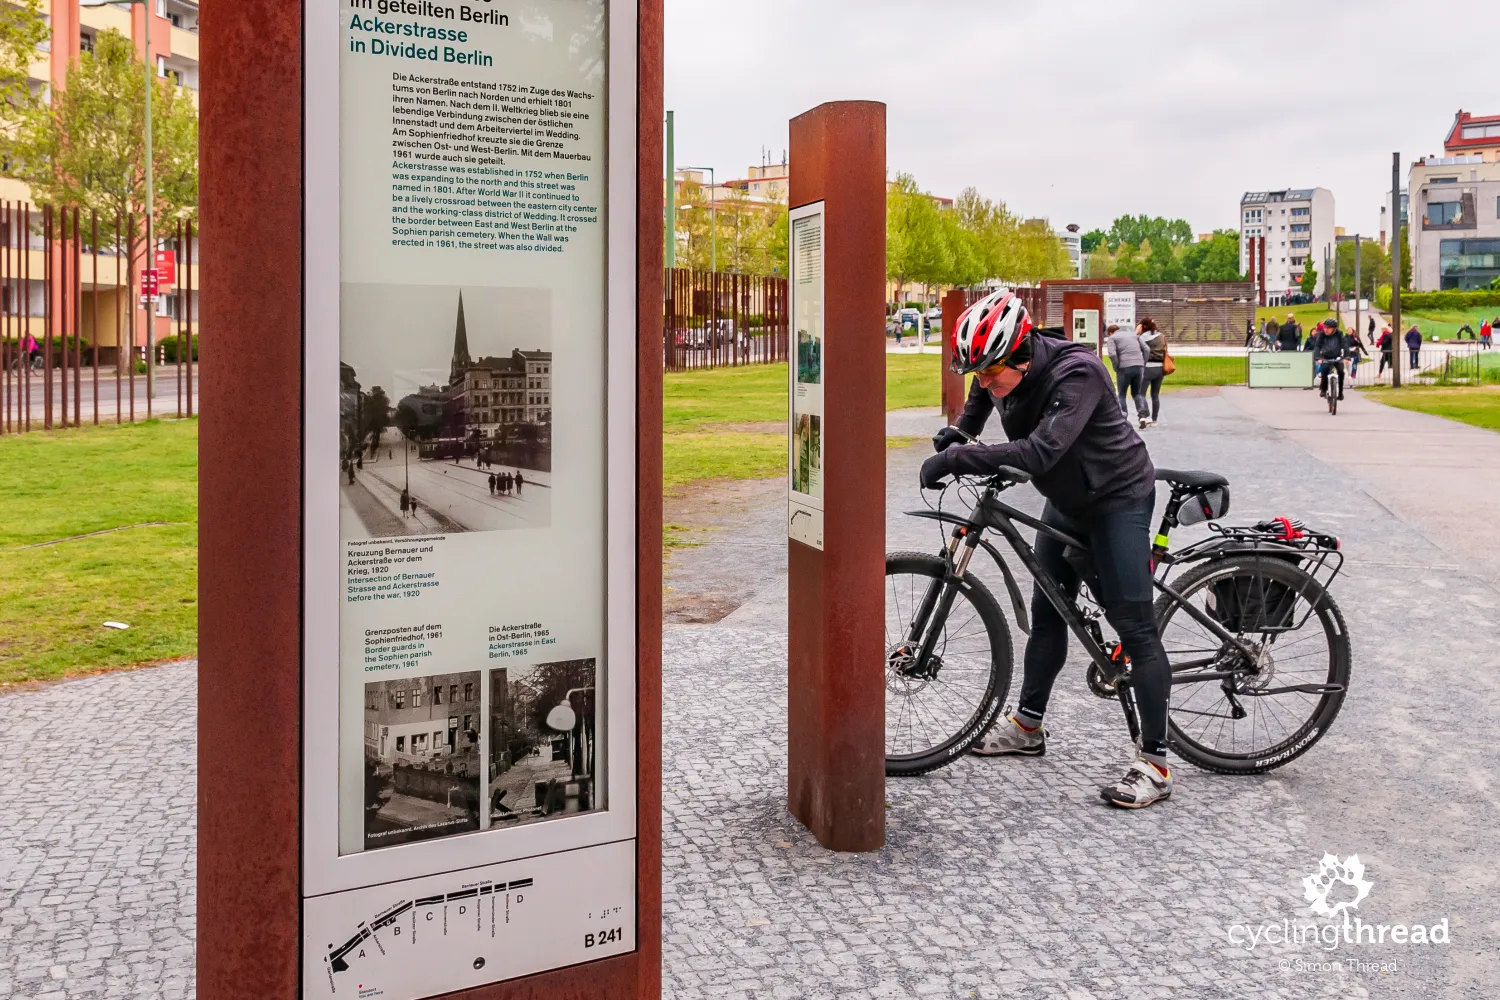 The Berlin Wall Memorial at Bernauer Strasse